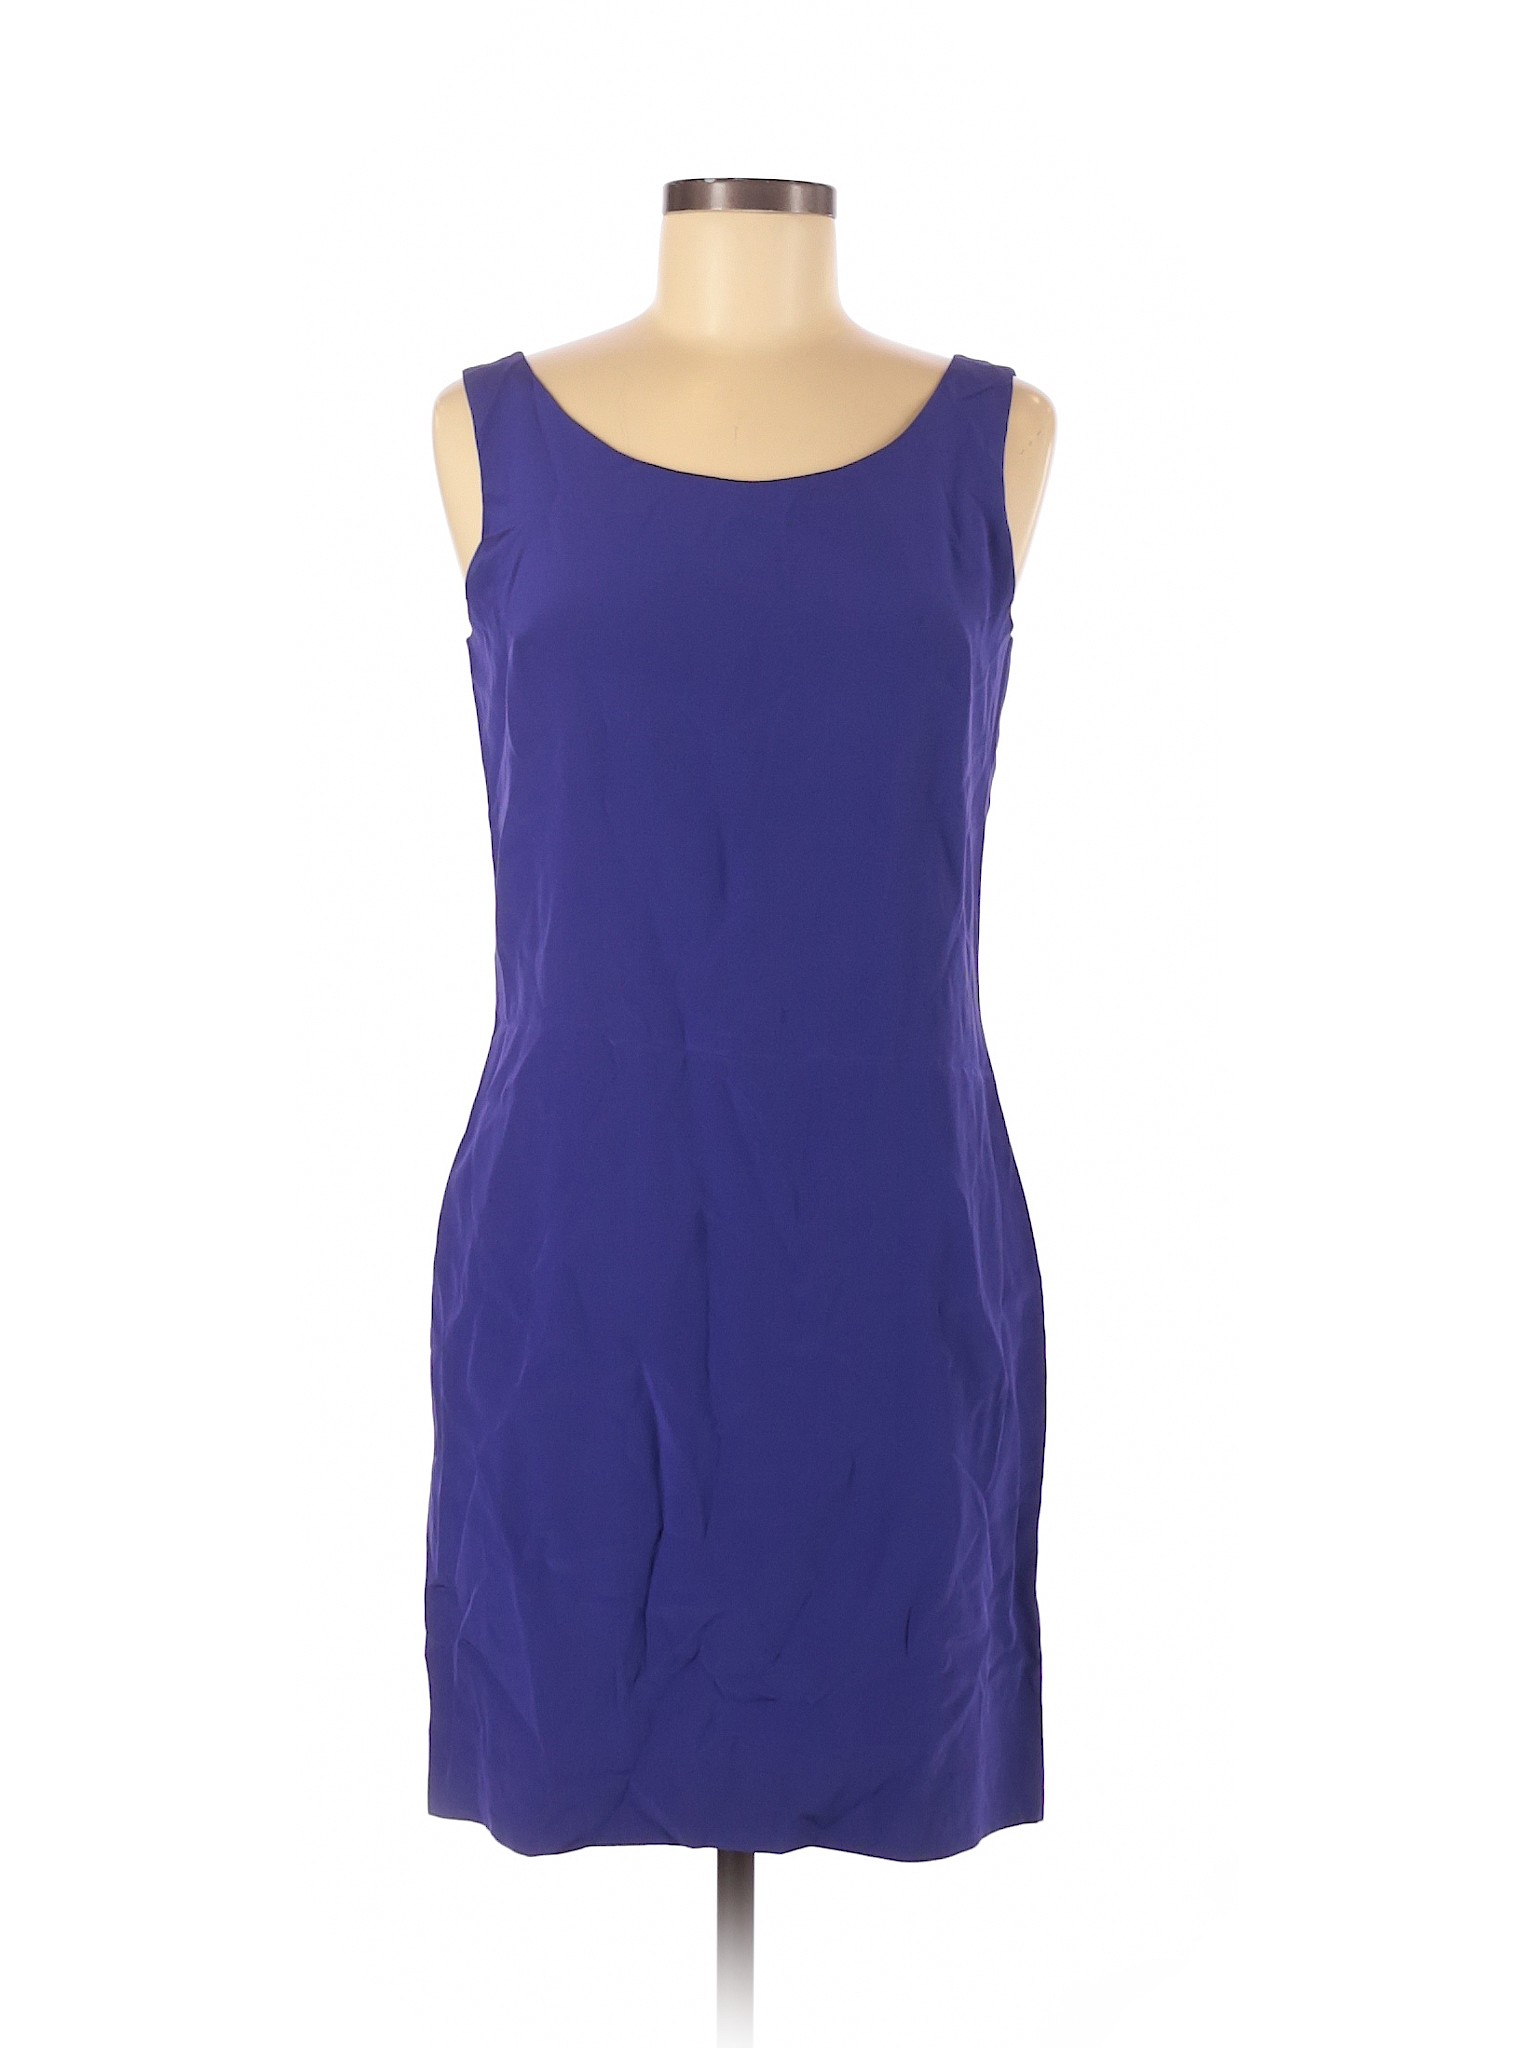 Neiman Marcus Women Blue Casual Dress 8 | eBay